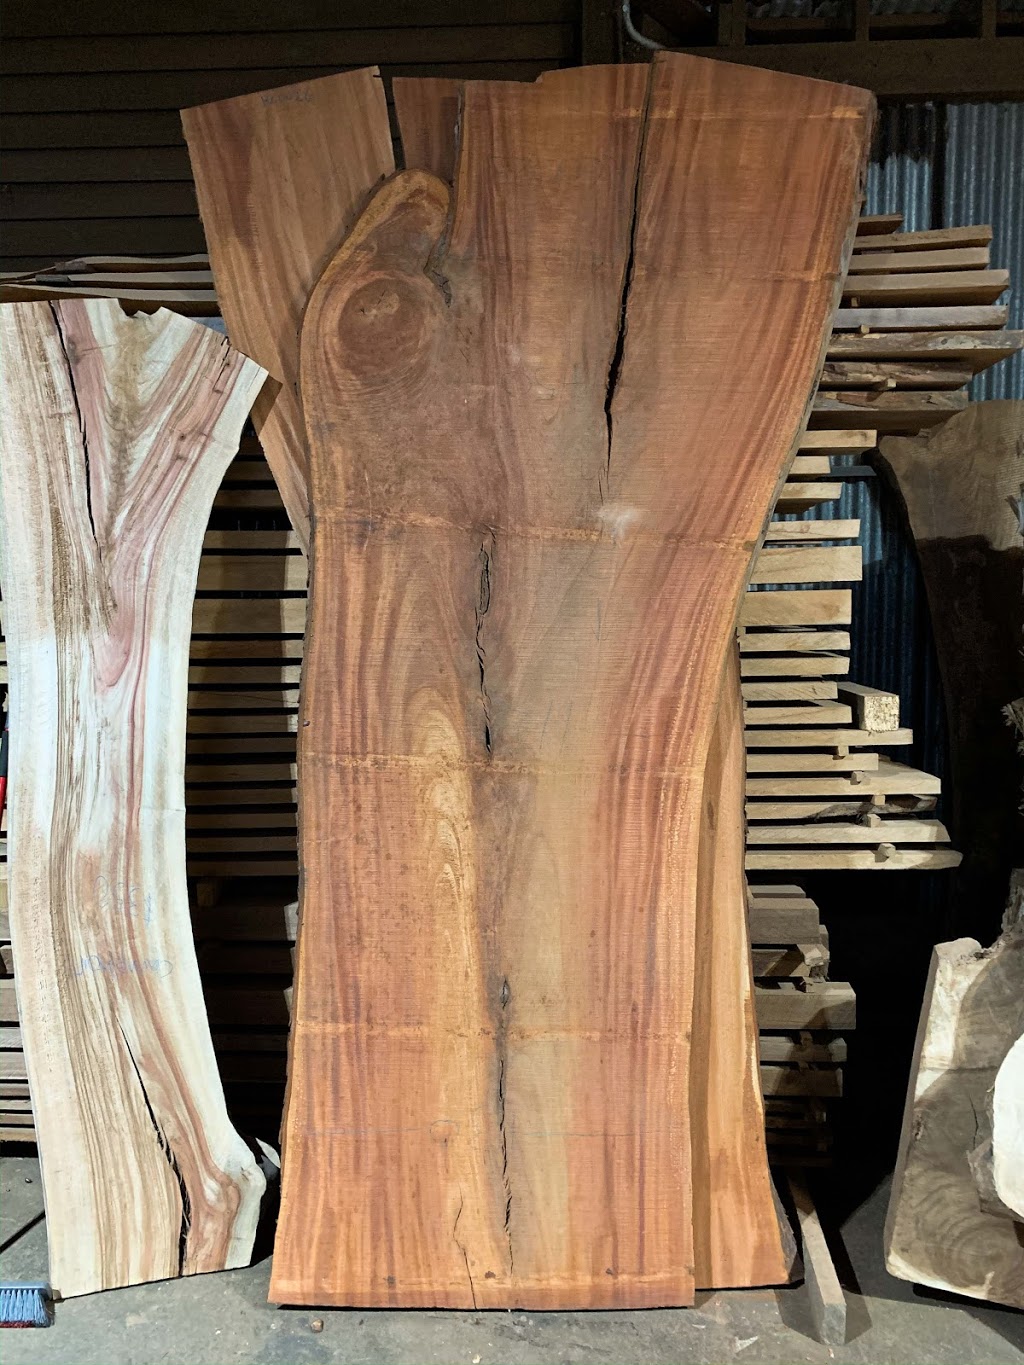 Topaz Sustainable Timbers | 2 Rankines Mill Rd, Lake Eacham QLD 4885, Australia | Phone: 0439 858 719